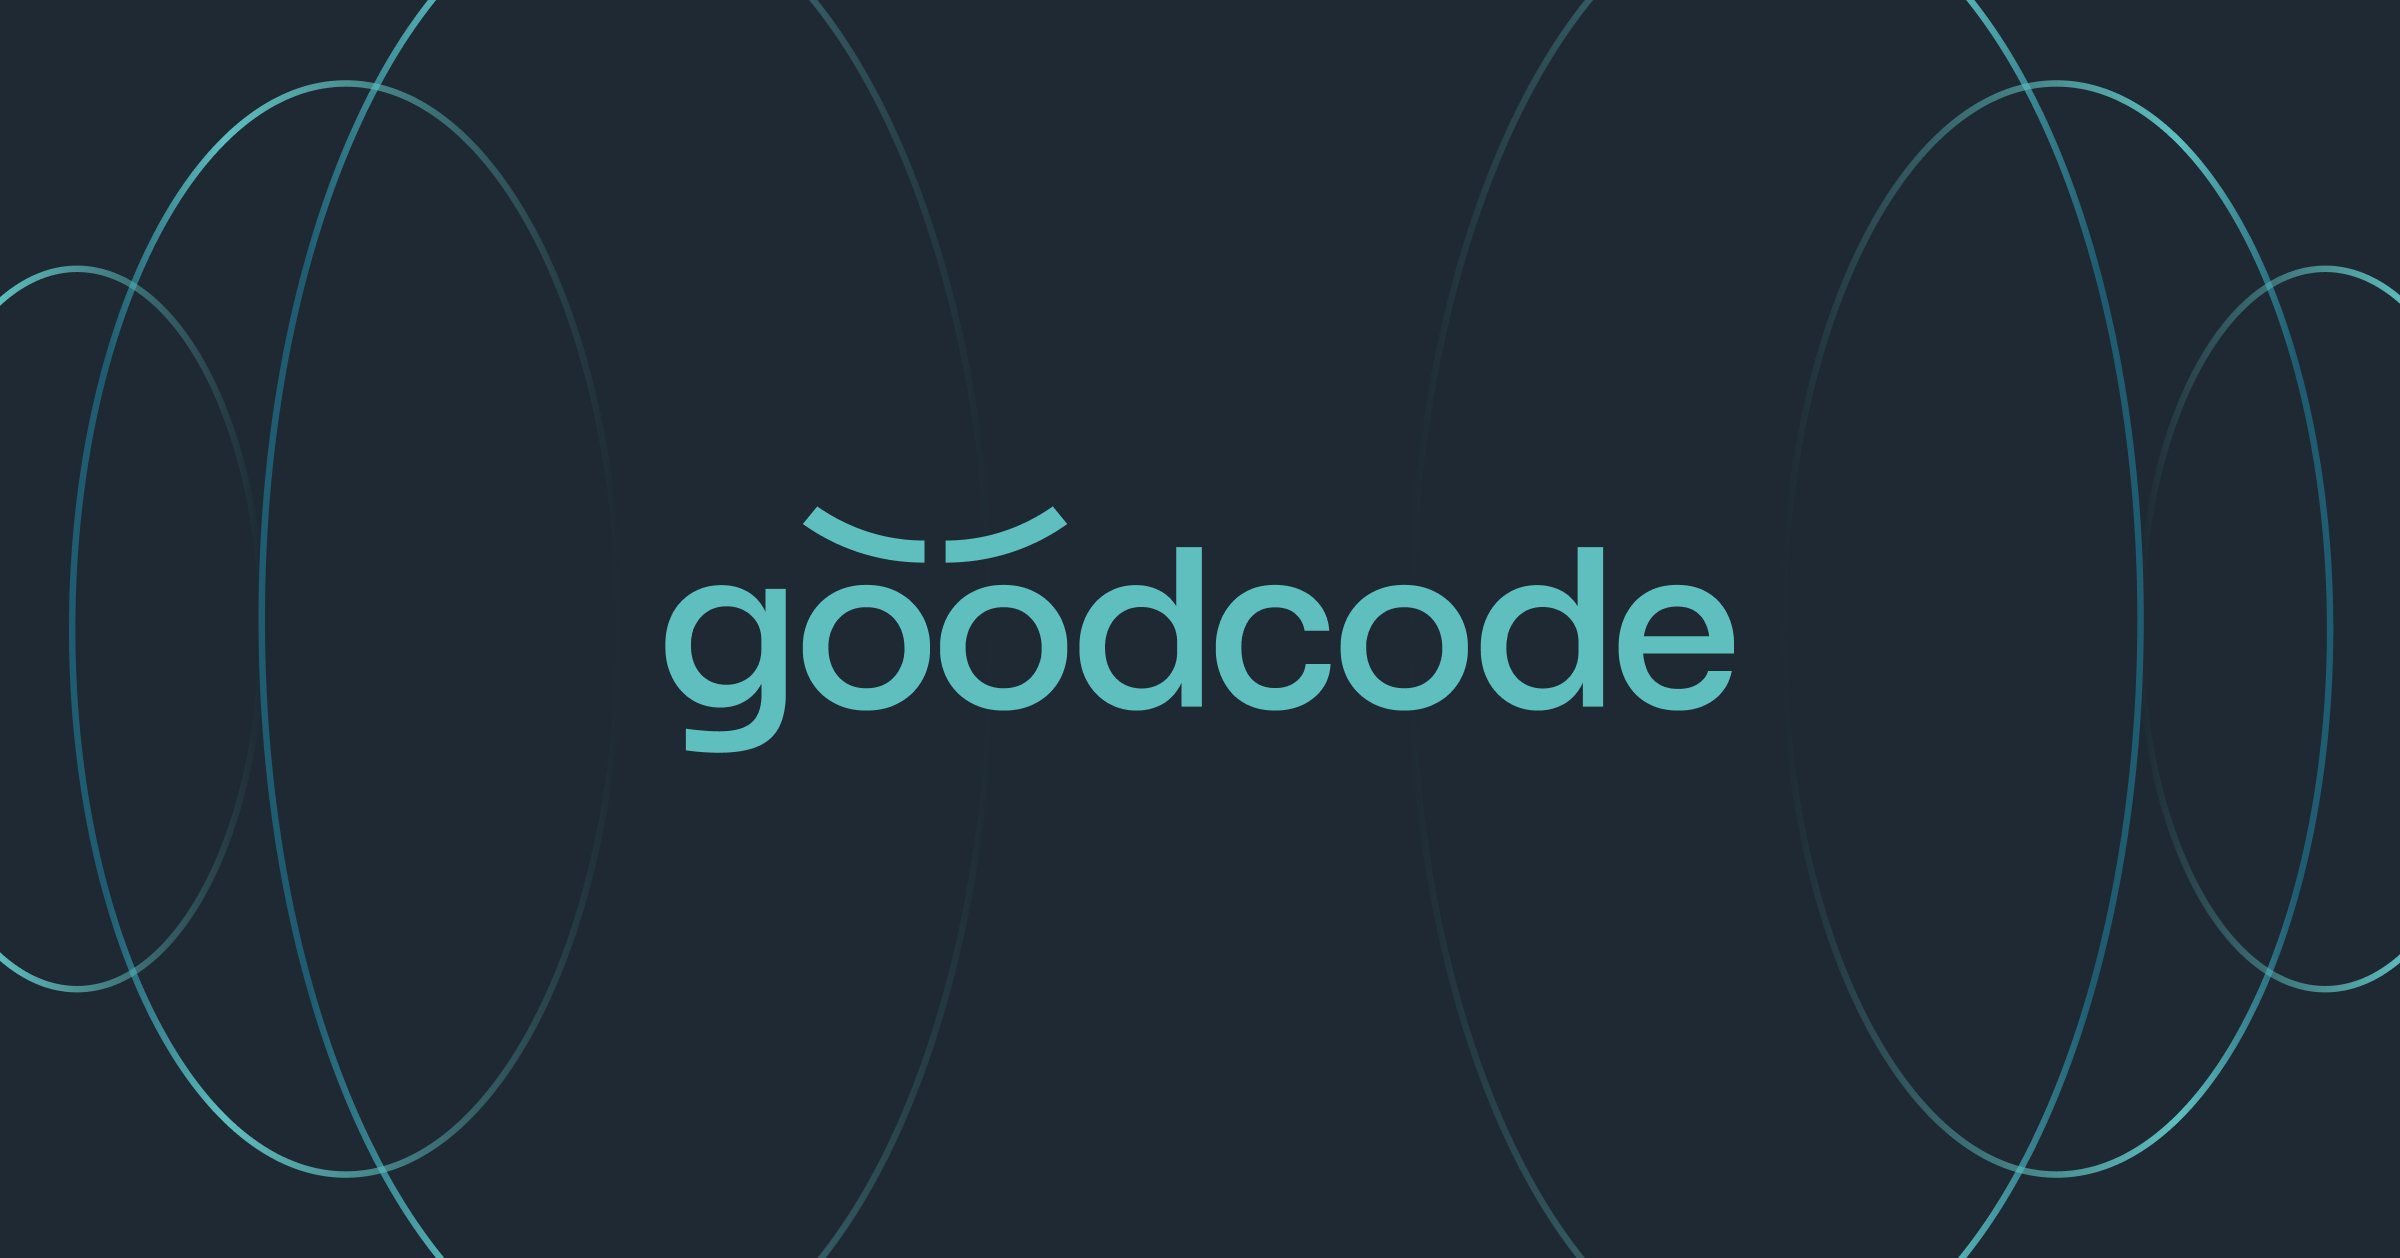 (c) Goodcode.ch